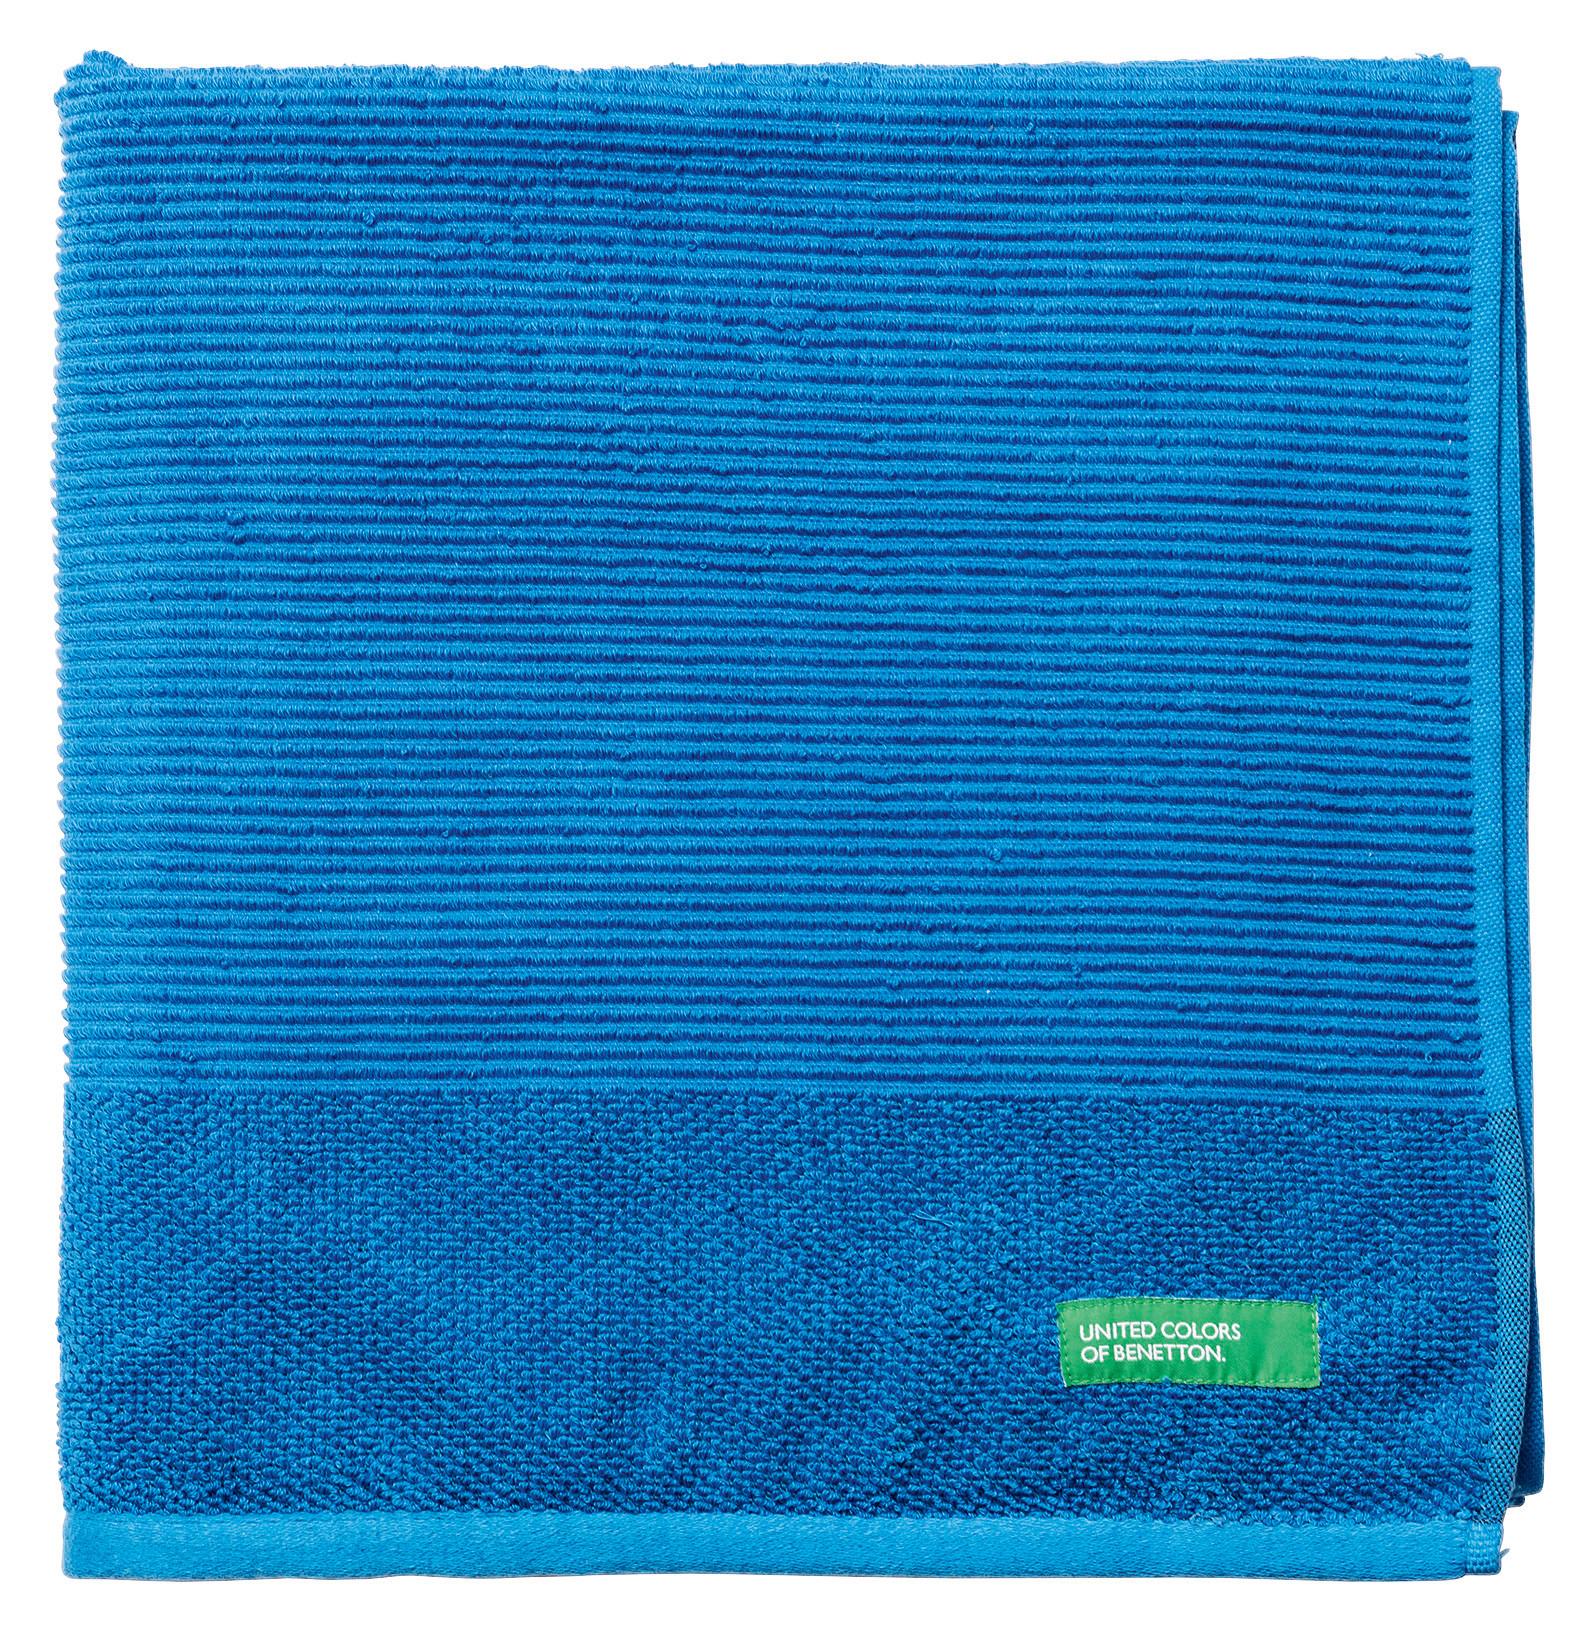 Handtuch Set Rainbow 3-Teilig Baumwolle Blau, 450 G/M2 - Blau, Basics, Textil - Benetton